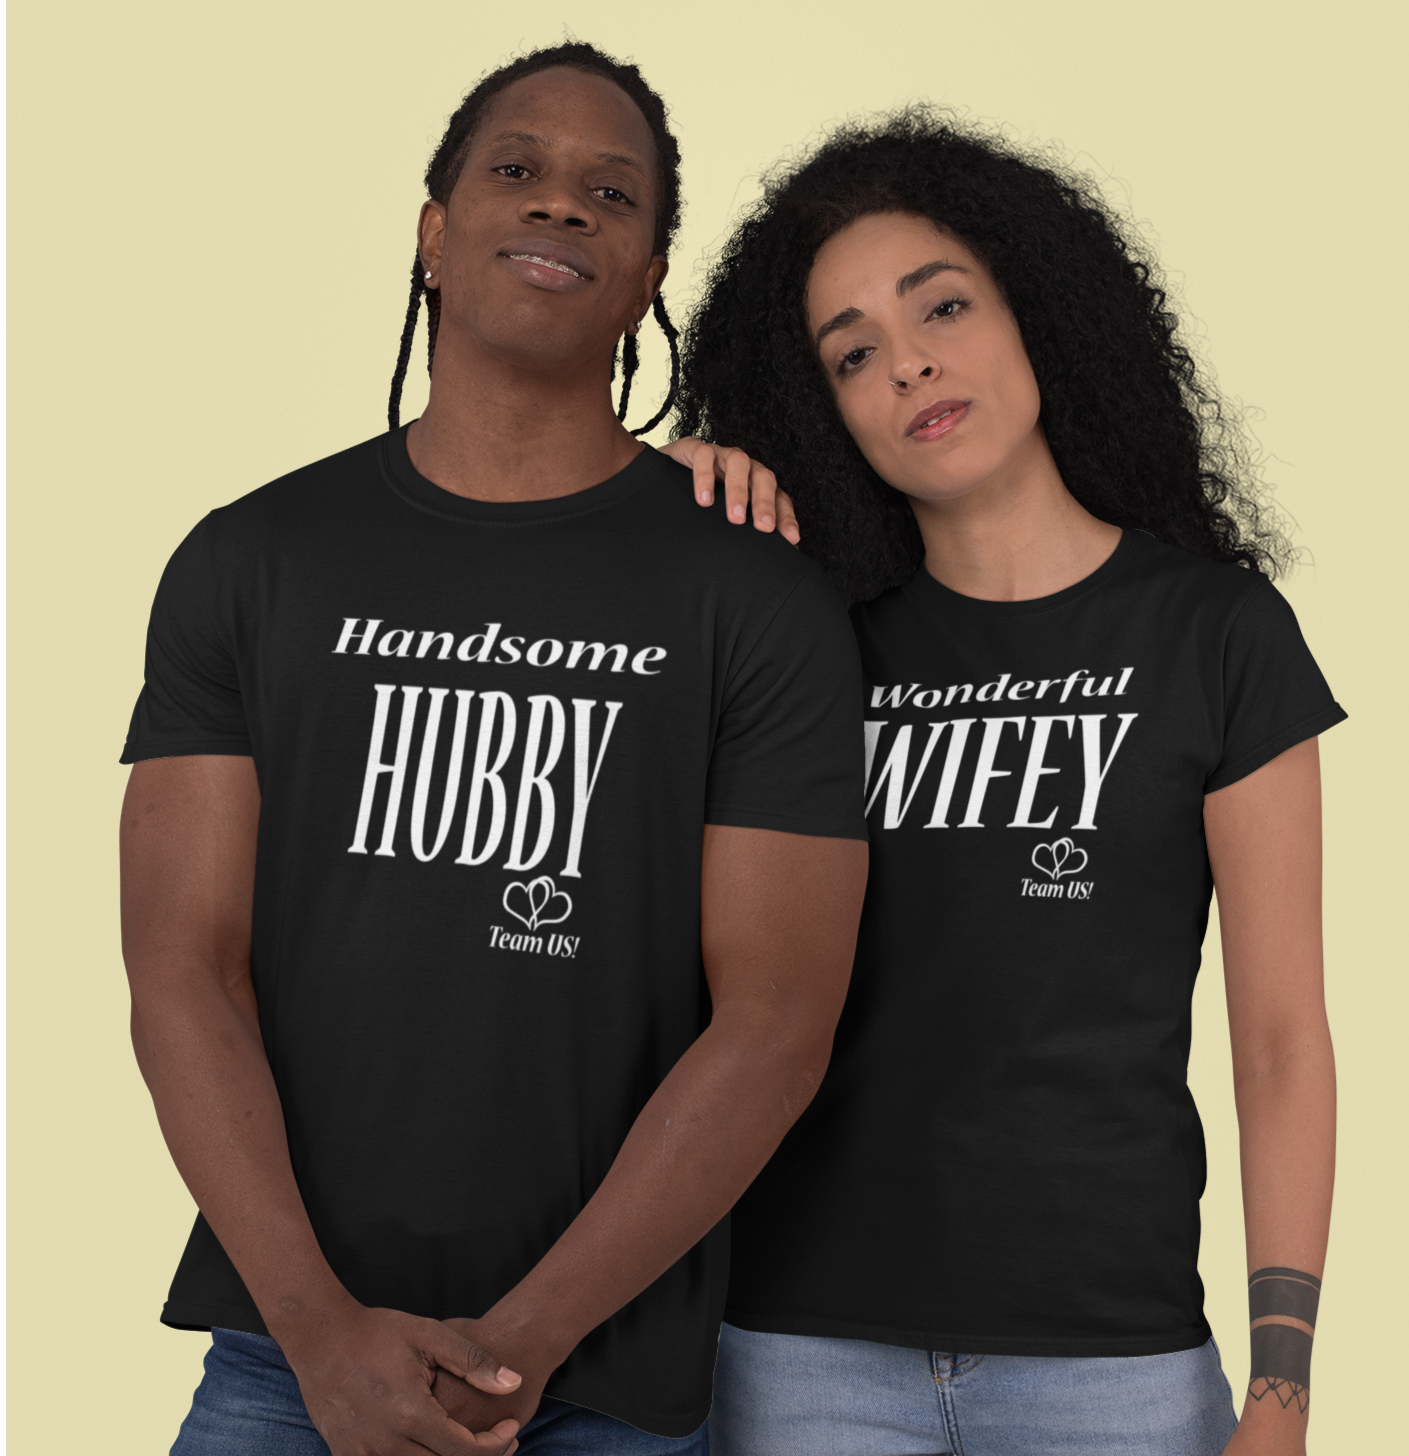 Hubby/Wifey Tees